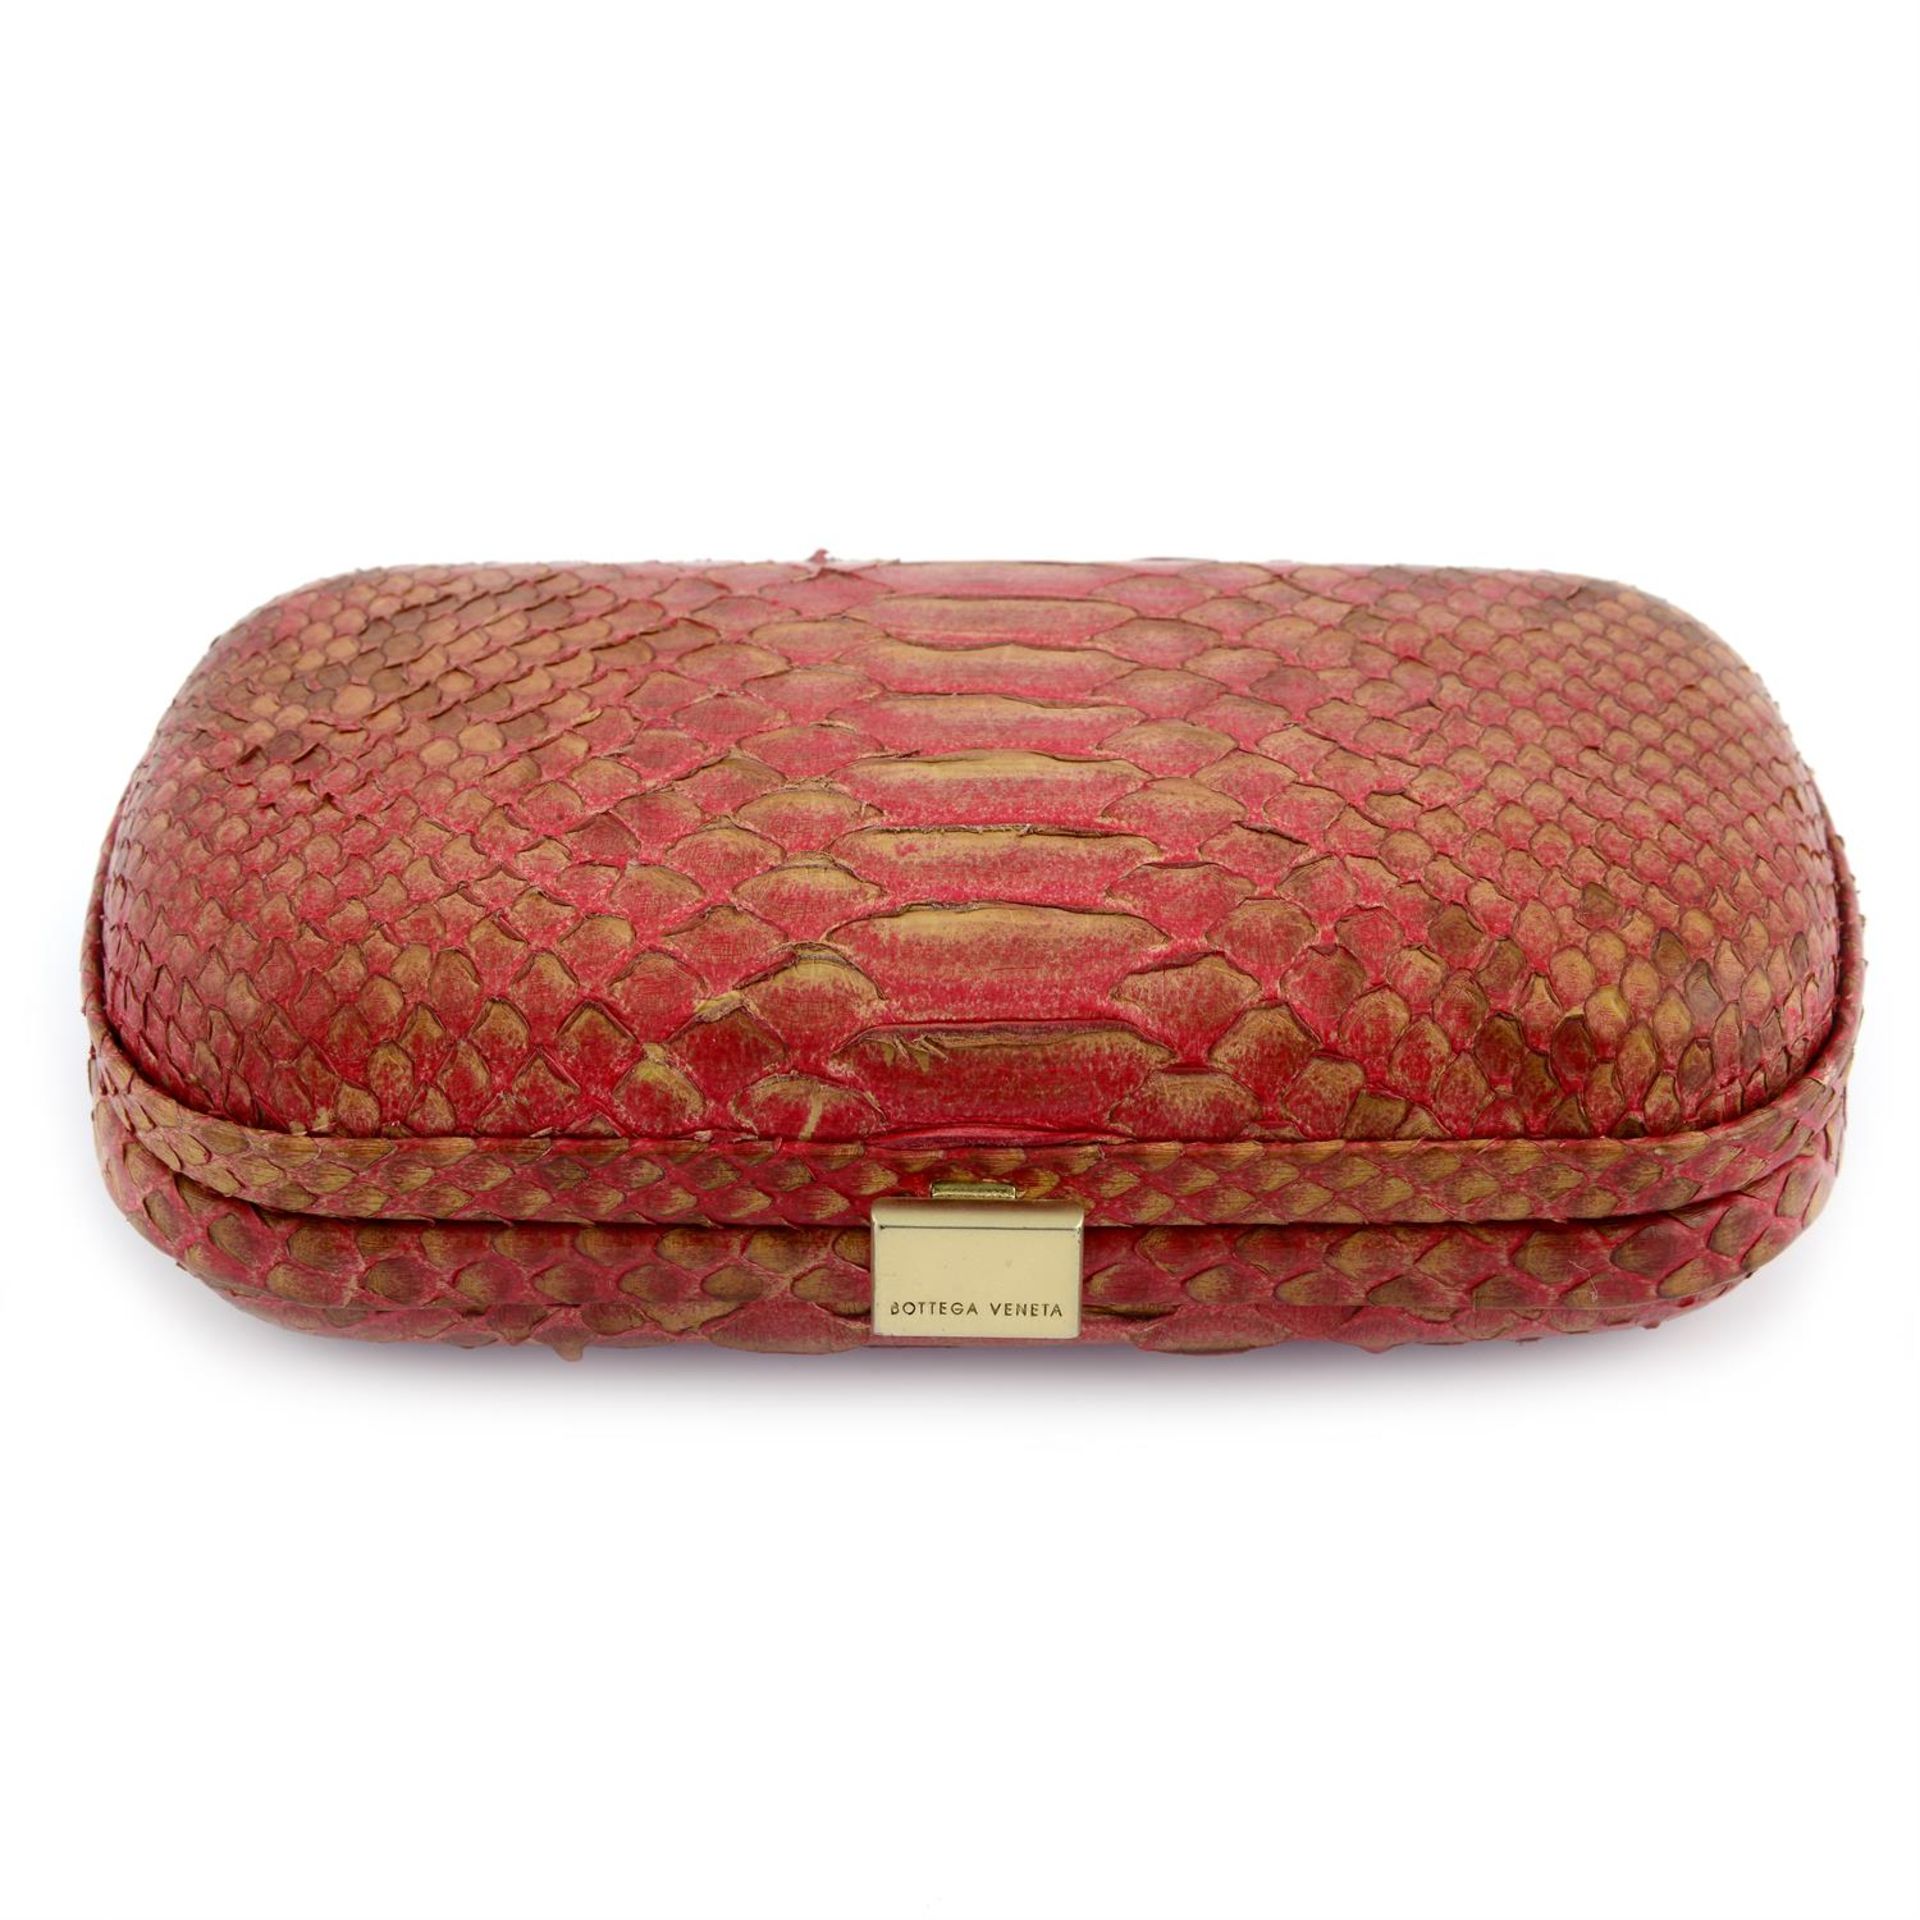 BOTTEGA VENETA - a pink snakeskin box clutch bag.